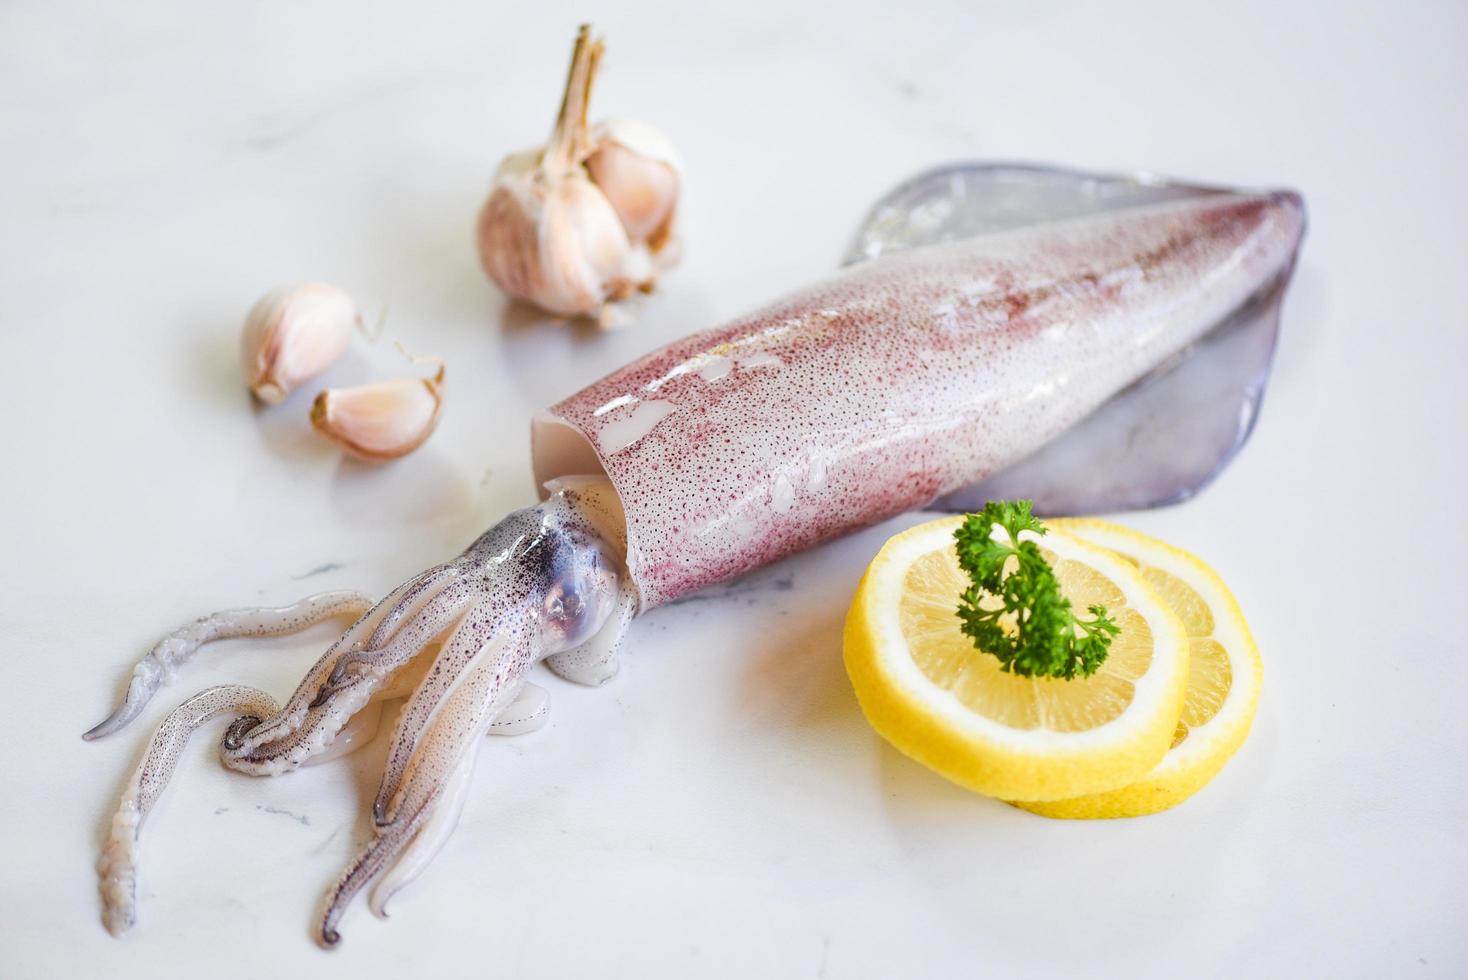 Calamares crudos sobre hielo con ensalada de especias limón ajo sobre fondo de placa blanca - calamares frescos pulpo o sepia para comida cocida en restaurante o mercado de mariscos foto